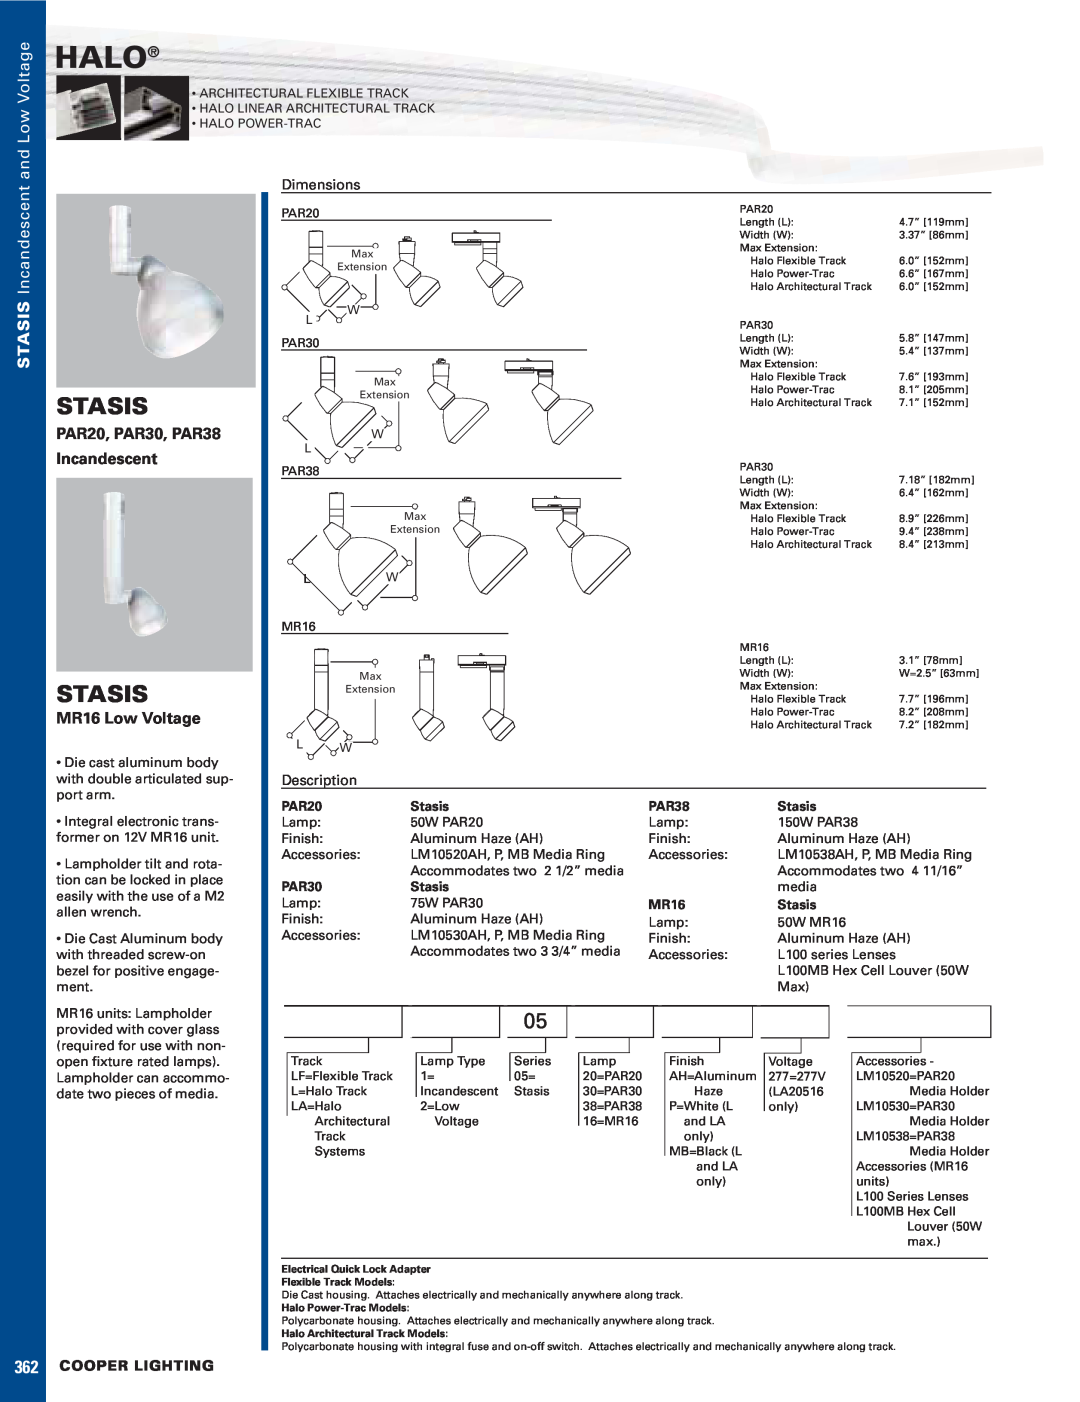 Halo Lighting System dimensions Halo, Stasis, and Low Voltage, STASIS Incandescent, PAR20, PAR30, PAR38 Incandescent 